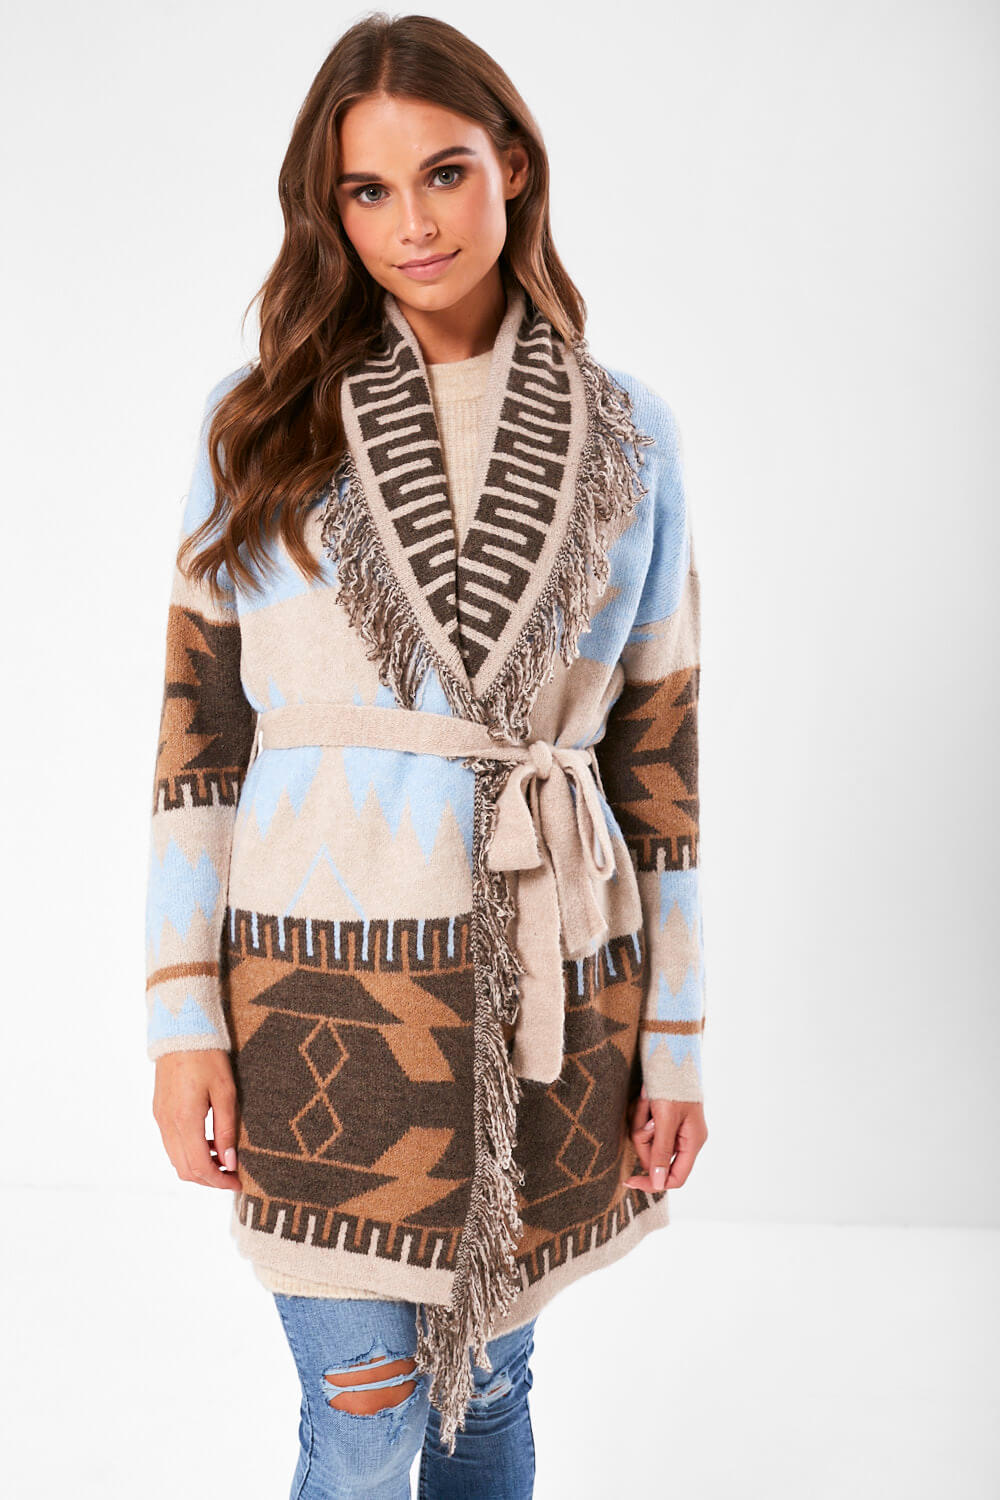 Hollister Women Sweater Medium Beige Blue Geometric Aztec Cardigan Tunic  READ